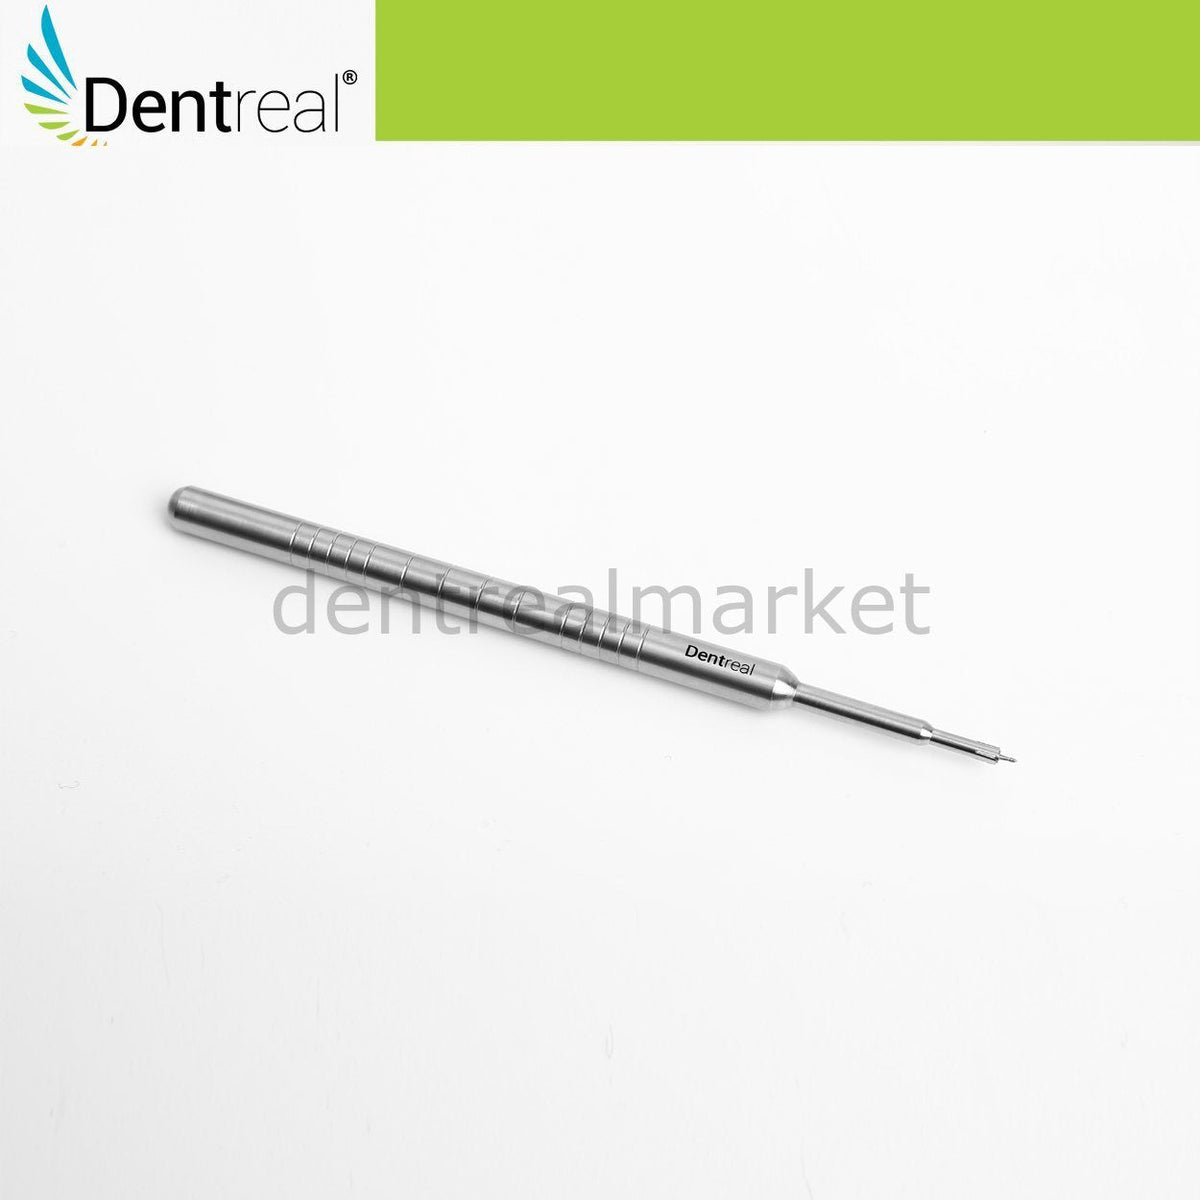 DentrealStore - Dentreal Memfix GBR Handpiece for Membrane Pin - Fixation Handle